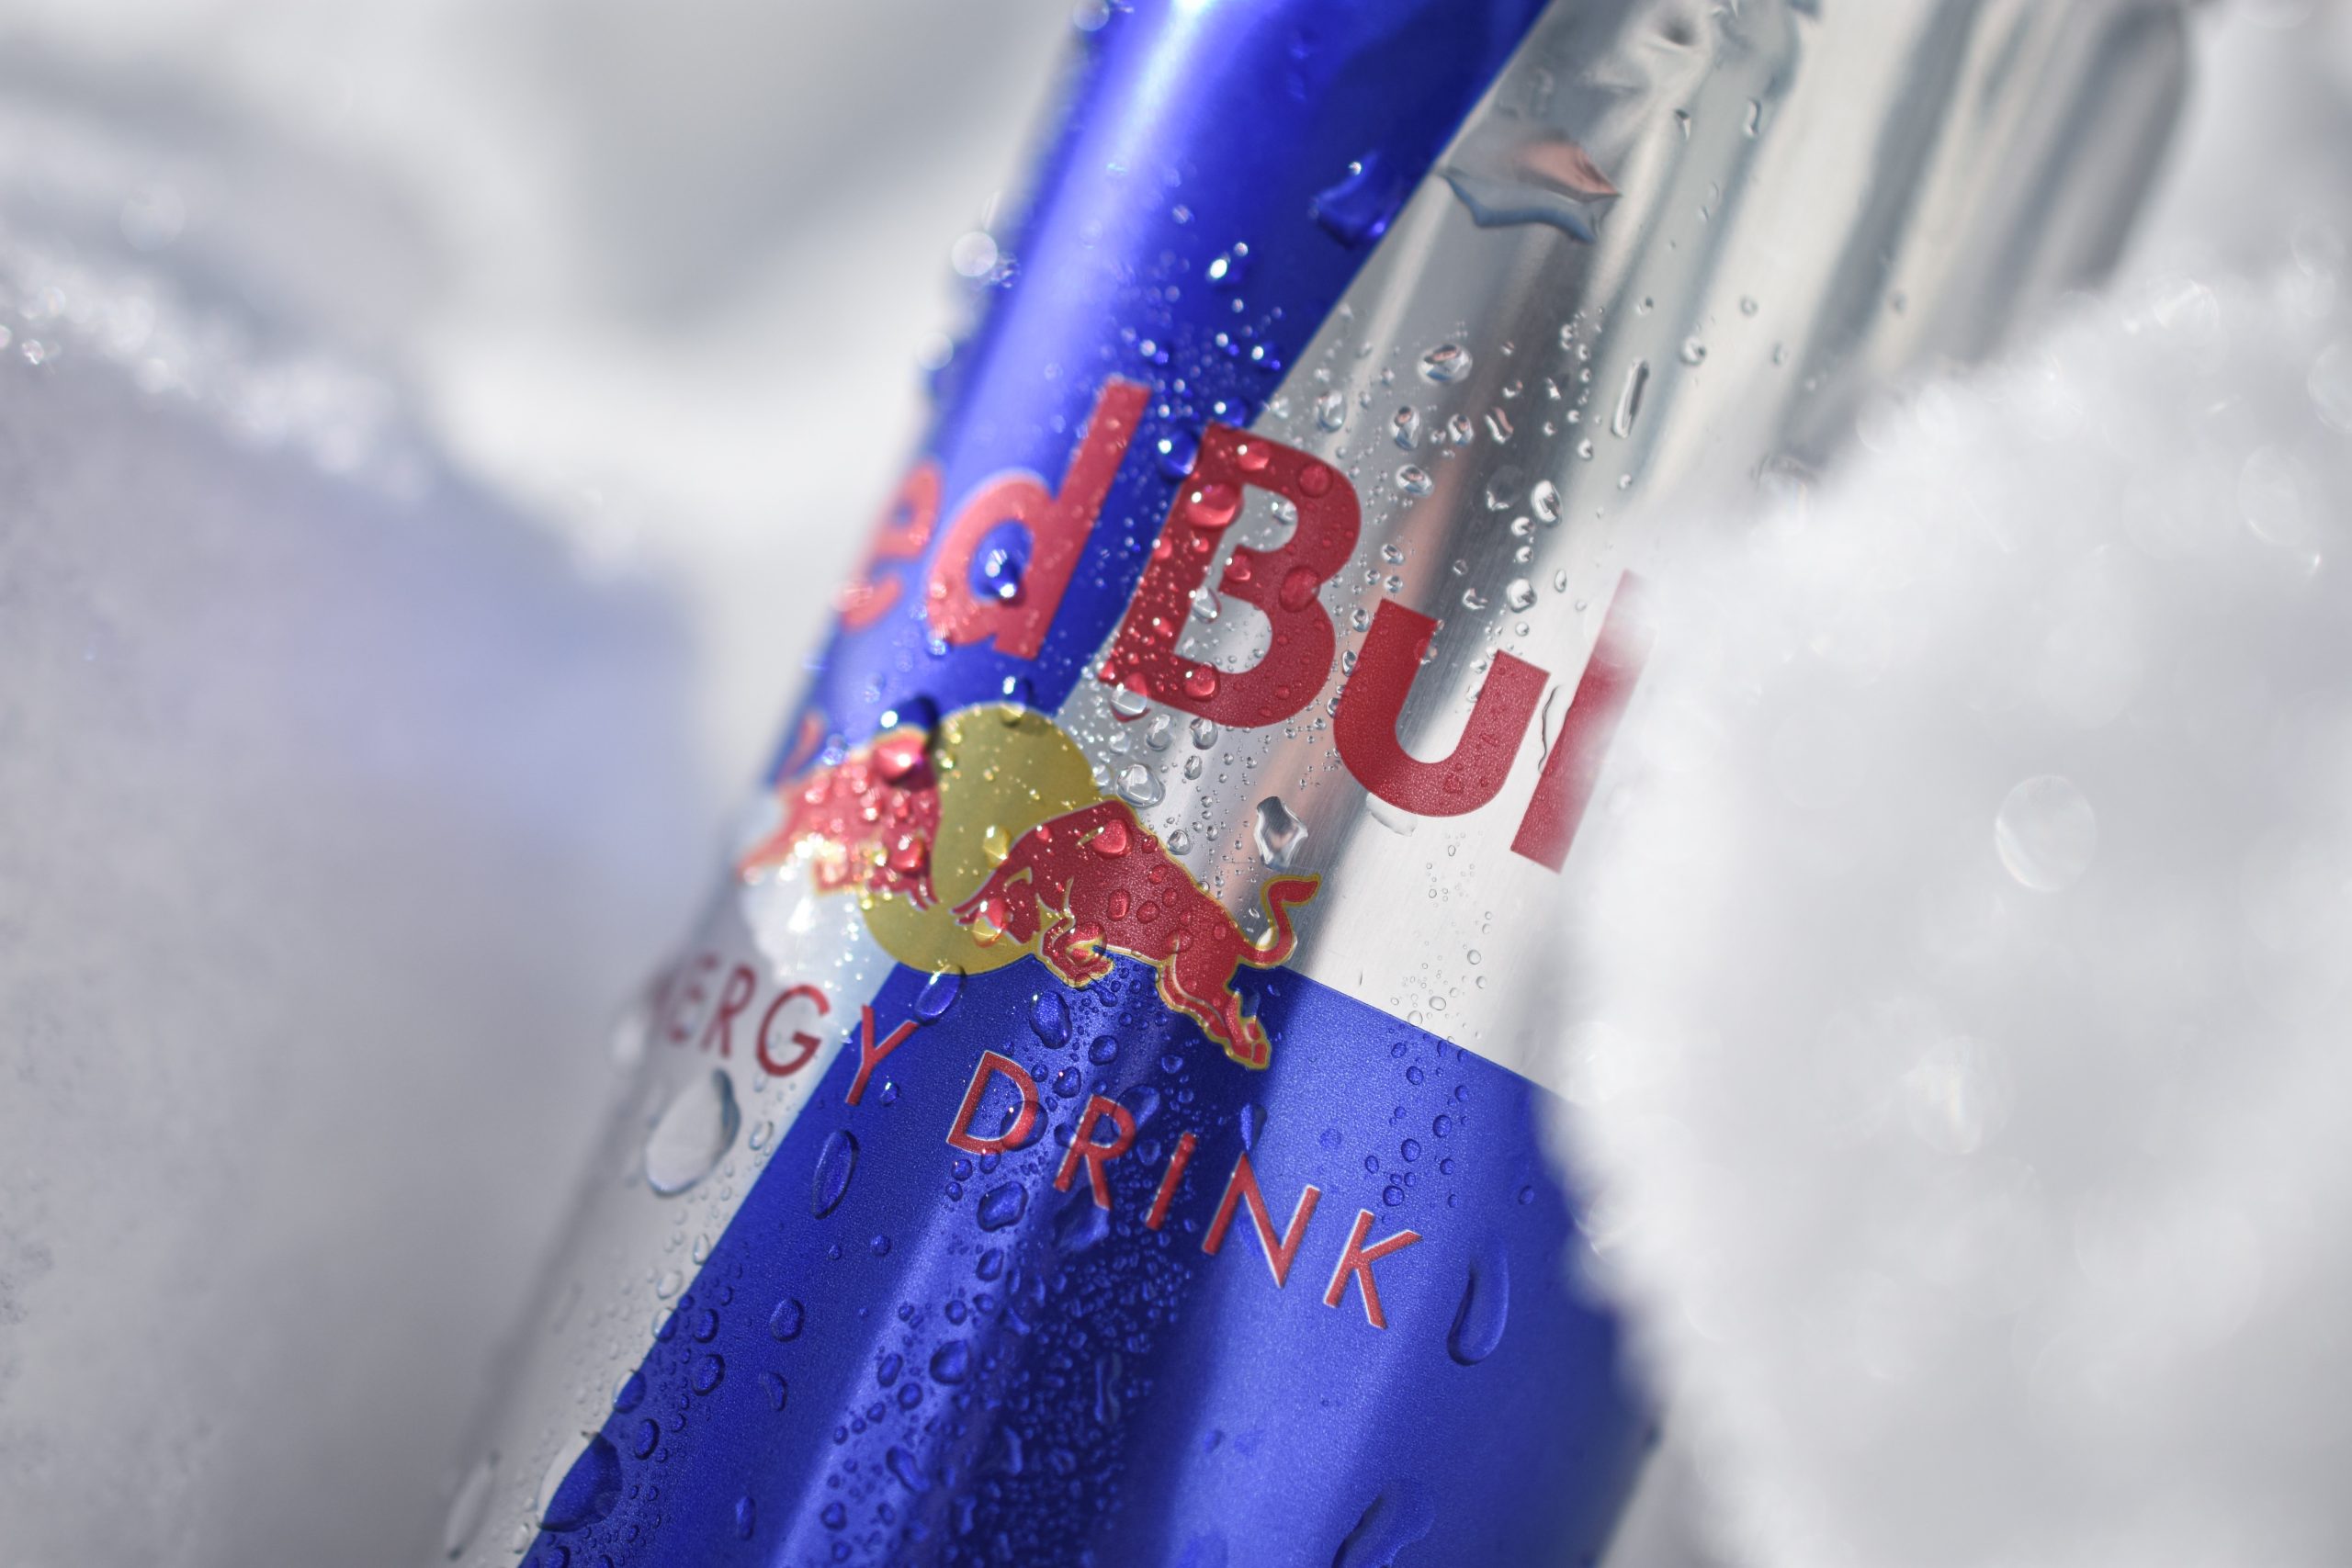 Minuman energi Red Bull